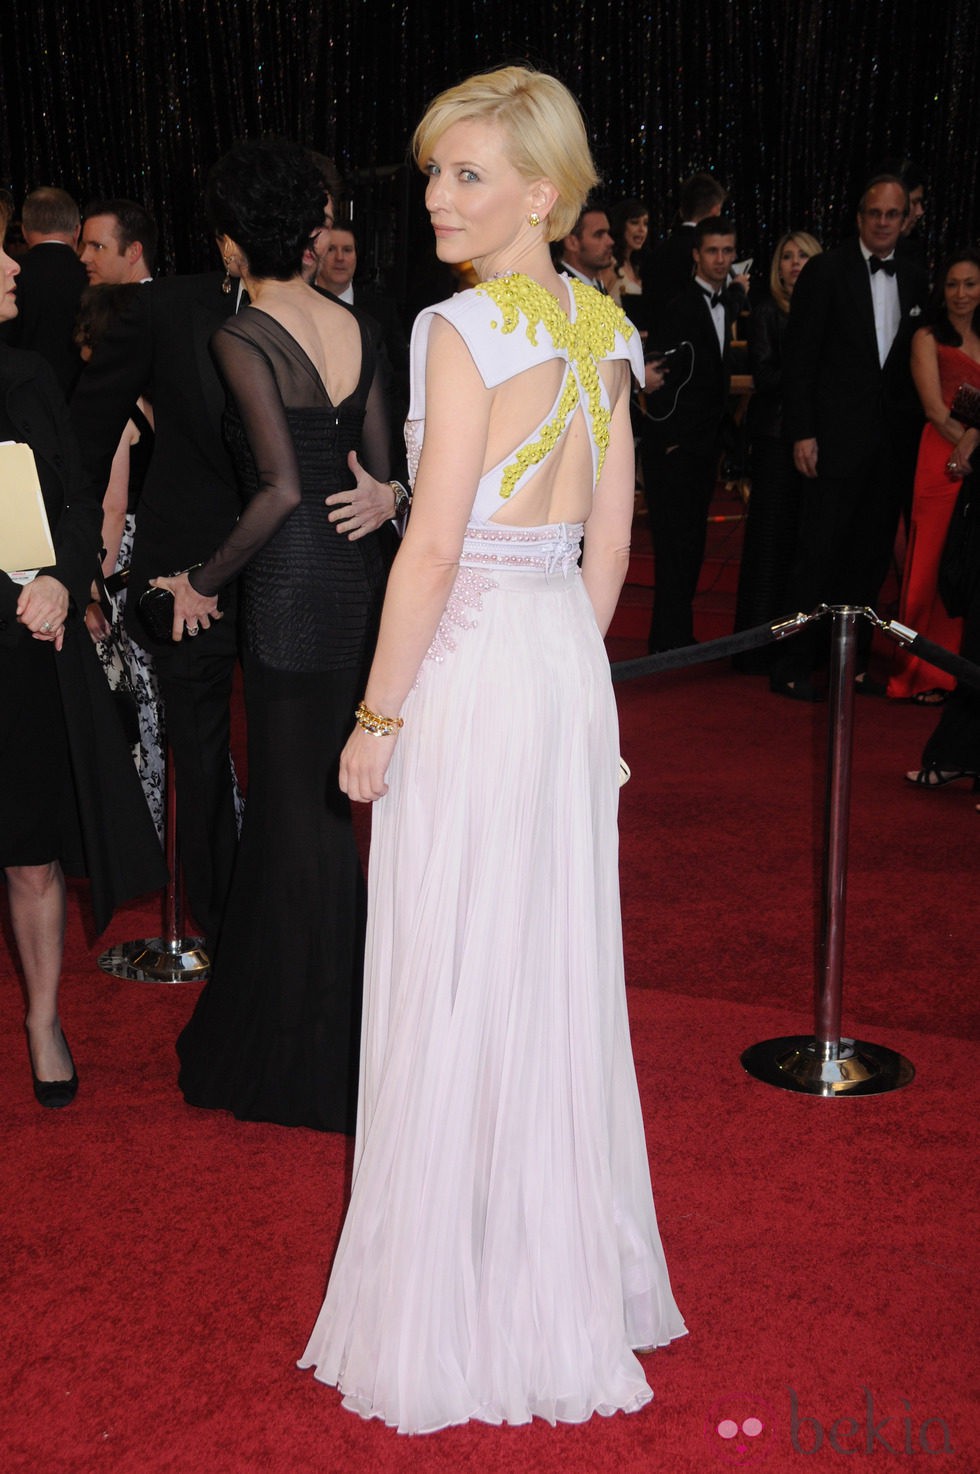 Vista trasera del Givenchy que lució Cate Blanchett en los Oscar 2011